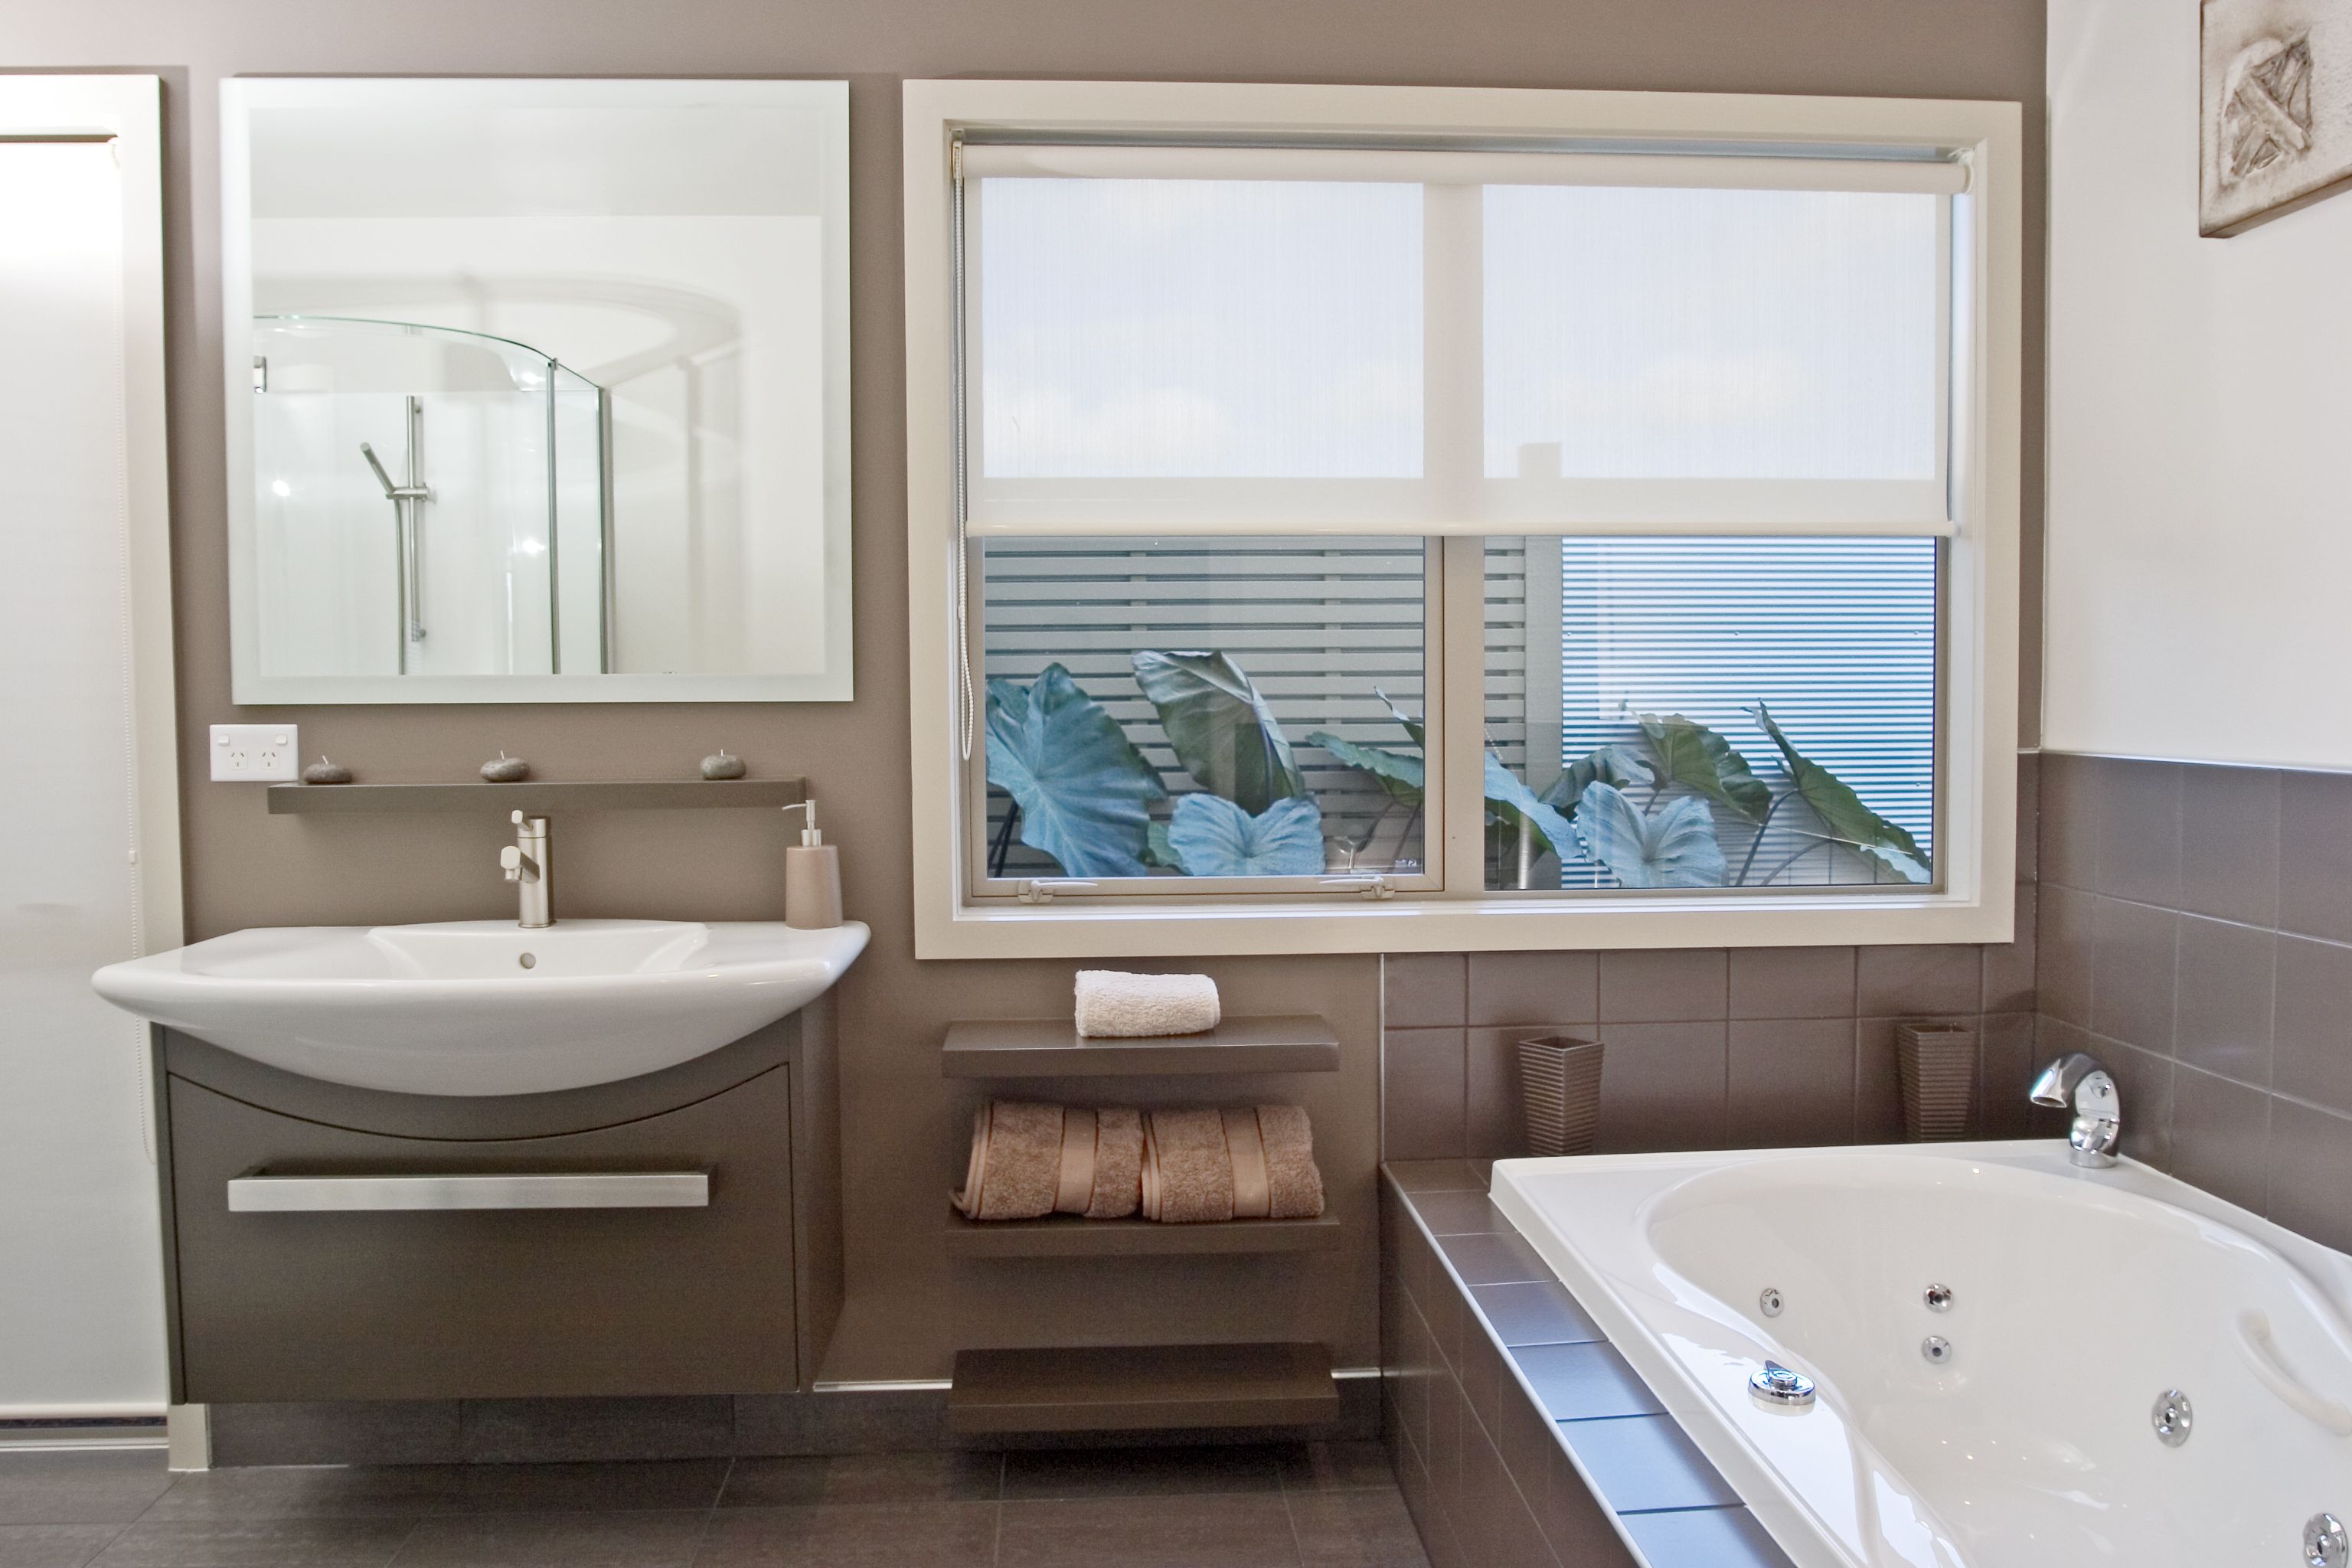 5 tips for designing or remodeling your bathroom